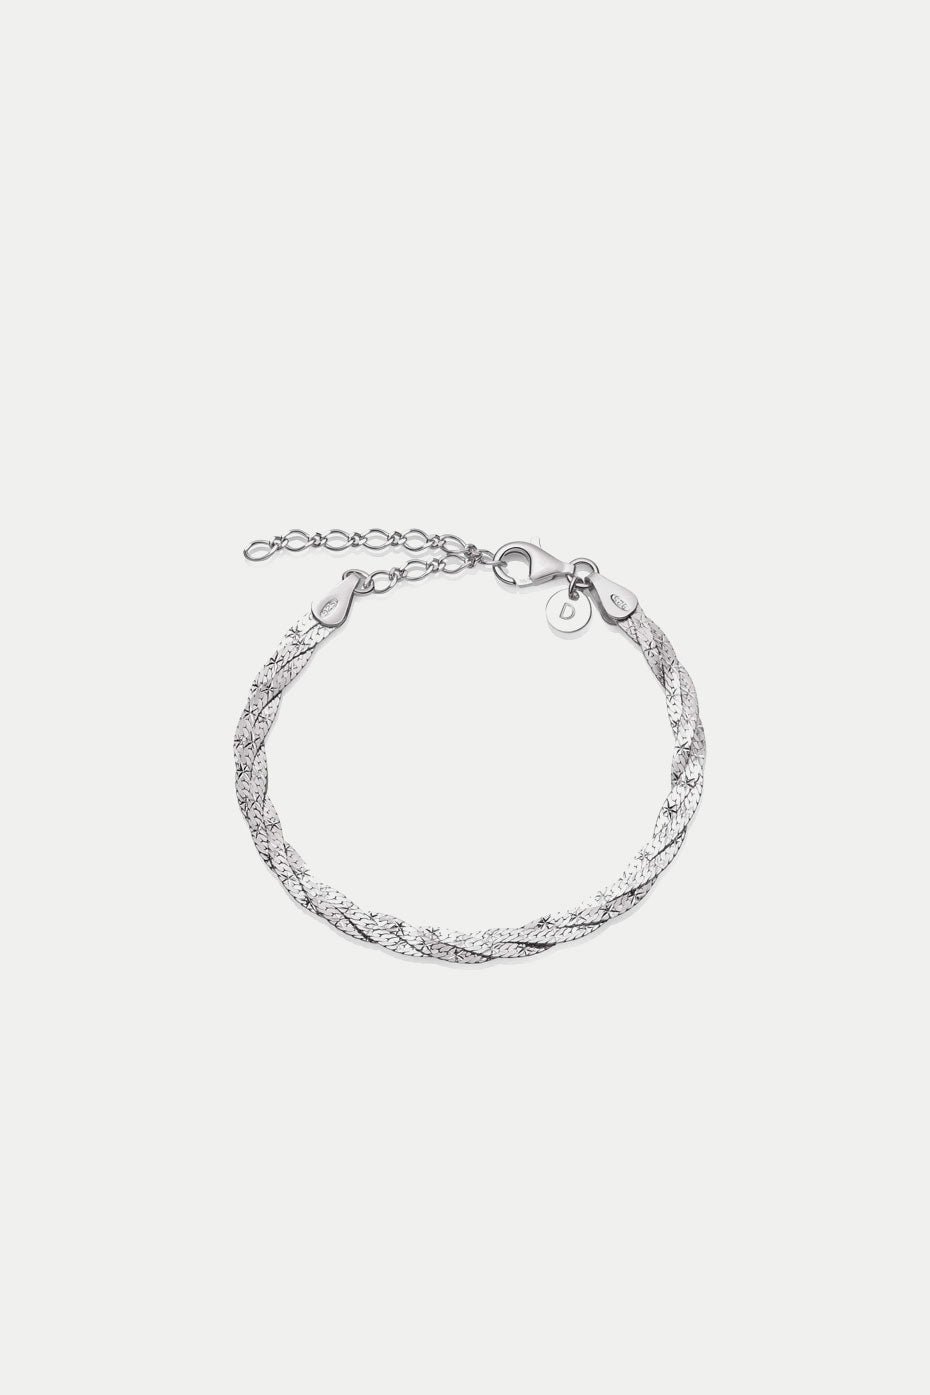 Daisy London Silver Vita Chain Bracelet